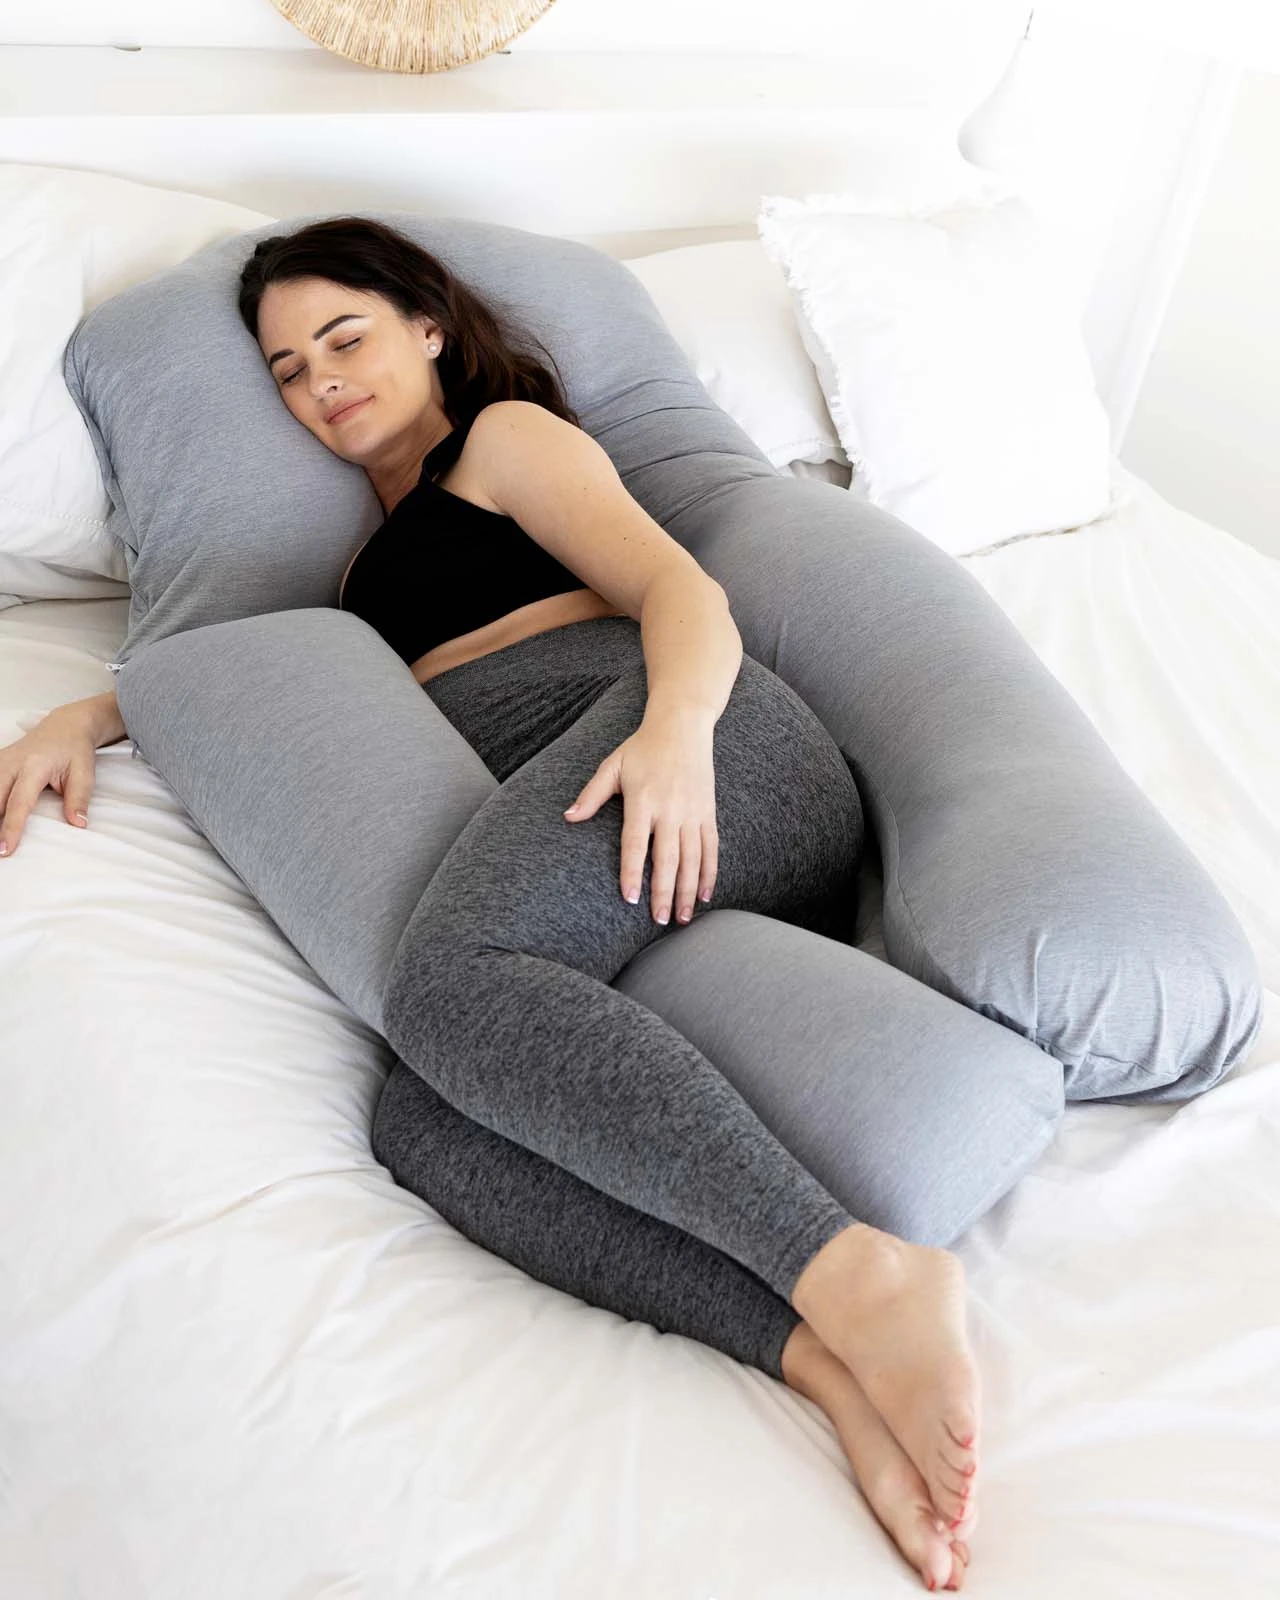 women sleeping in a body pillow